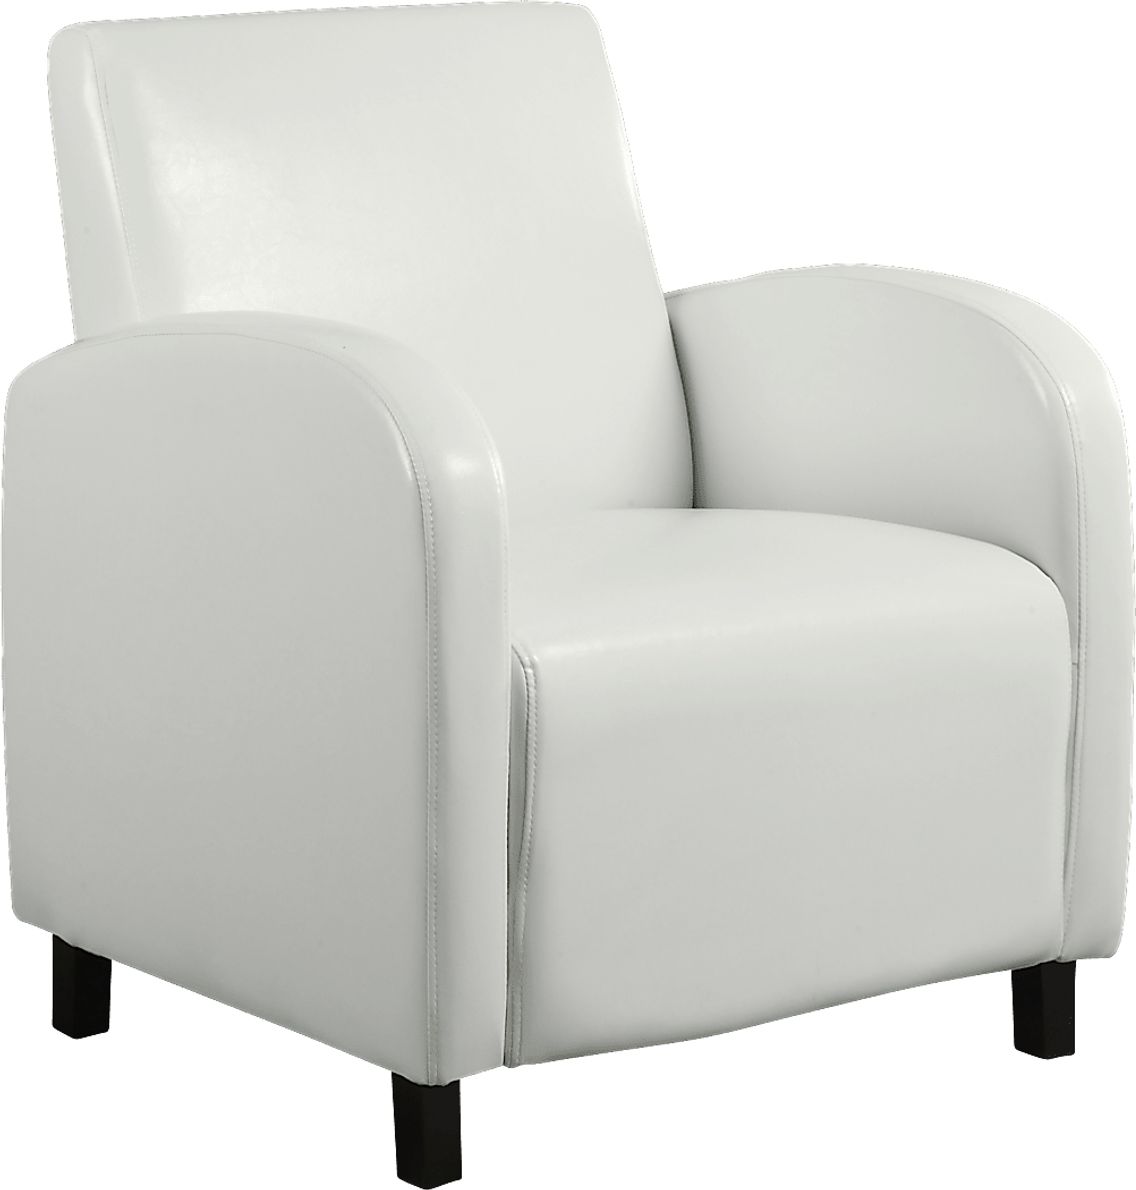 Hilandale White Accent Chair